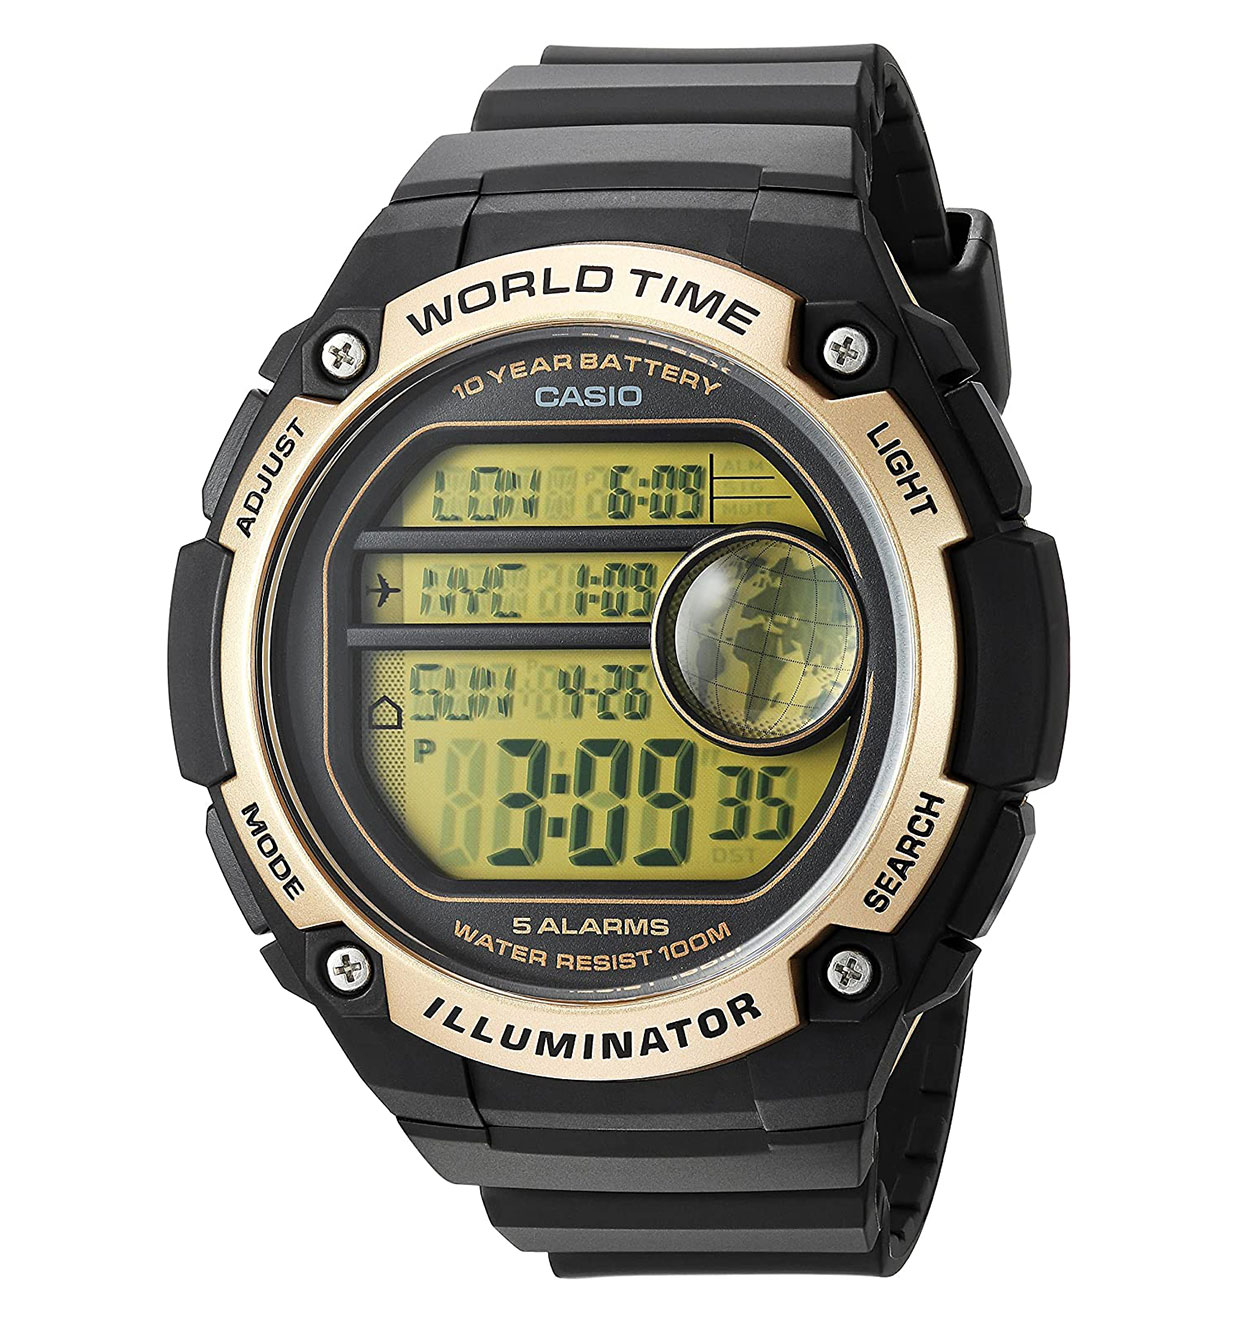 Casio AE-3000W World Time Watch